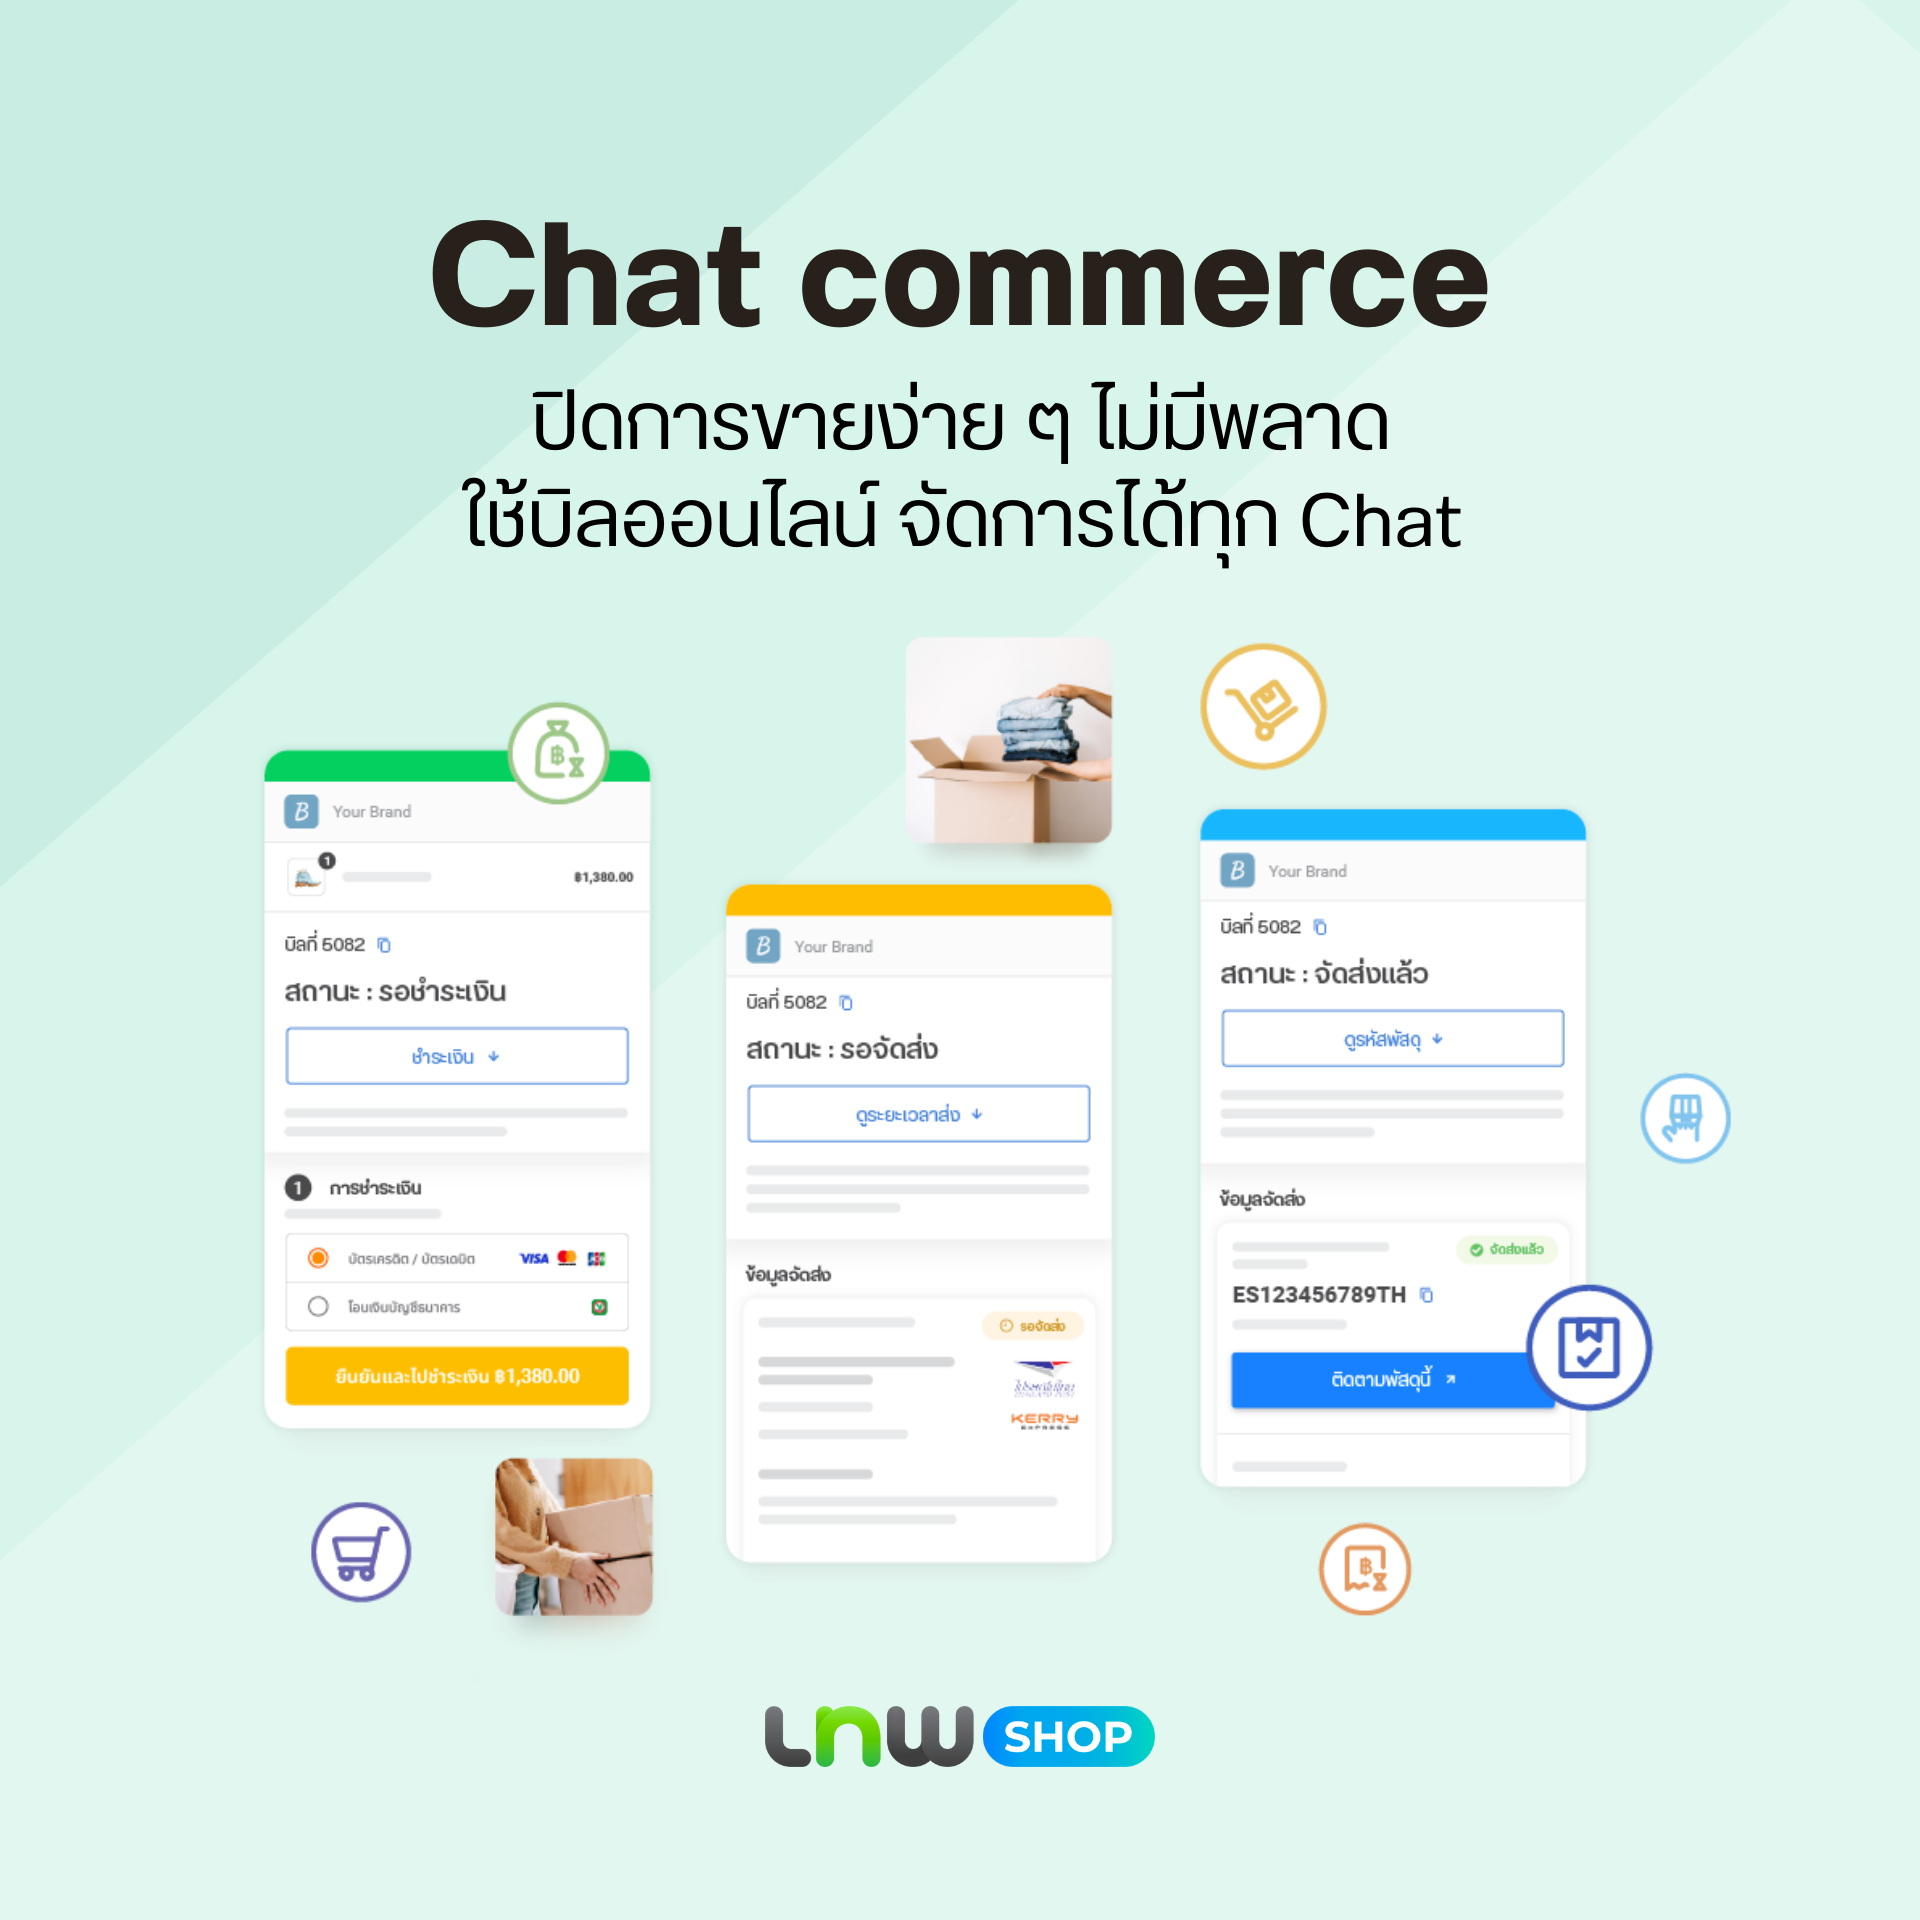 LnwShop Social - Chat Commerce